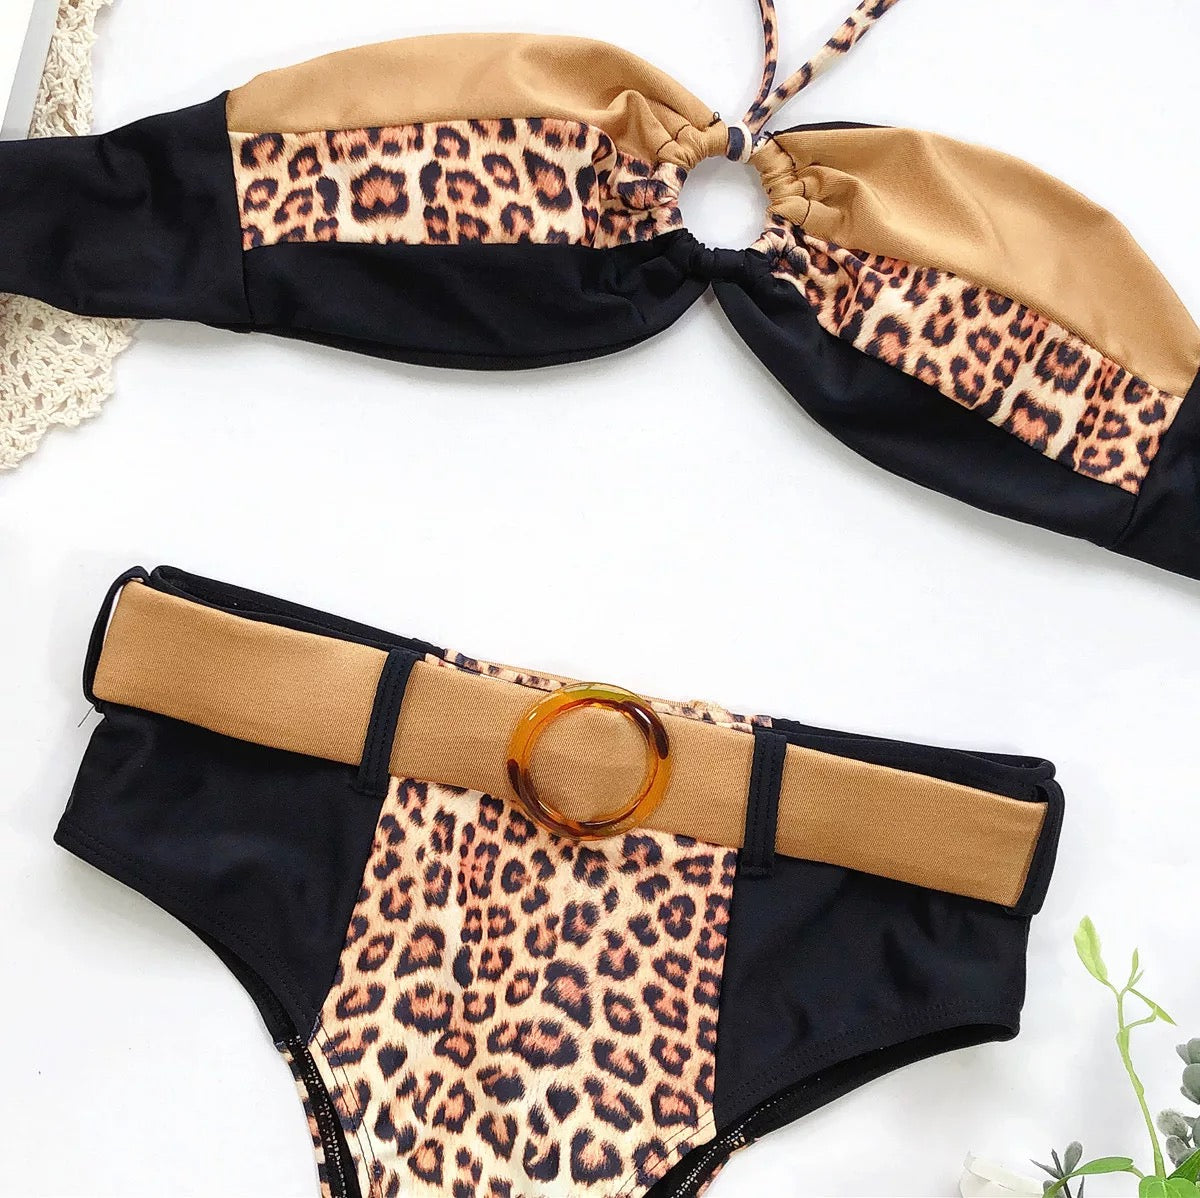 Leopard two pieces swimsuit